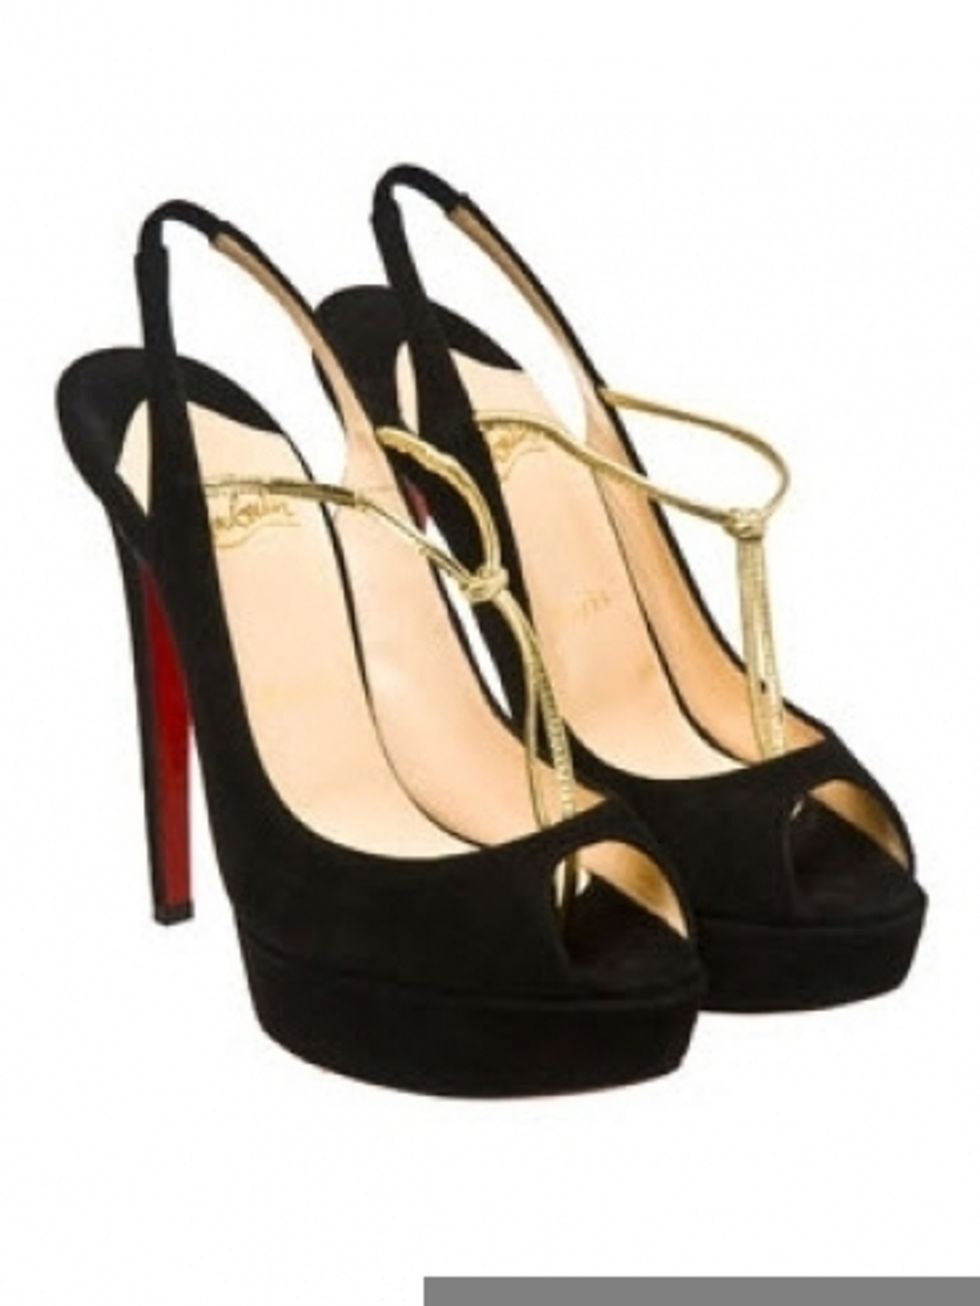 Product, Sandal, High heels, Basic pump, Black, Tan, Beige, Leather, Dancing shoe, Court shoe, 